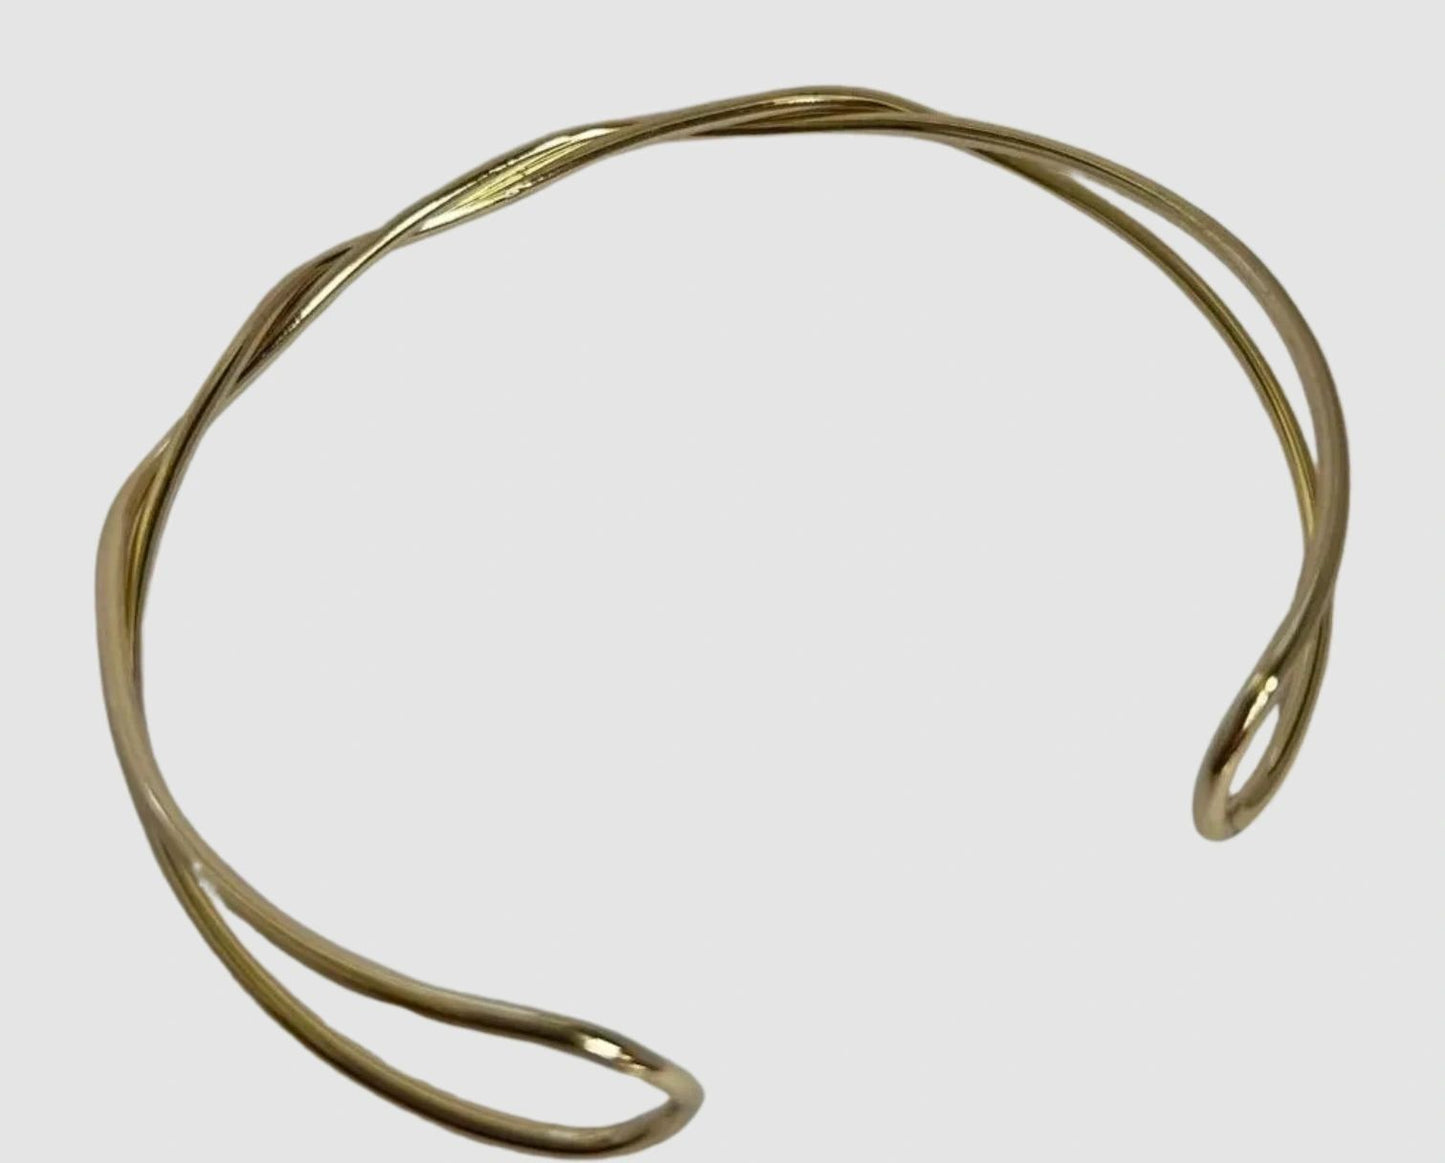 Delicate Cuff Bracelet in Silver or Gold - Metal / Lead Compliant